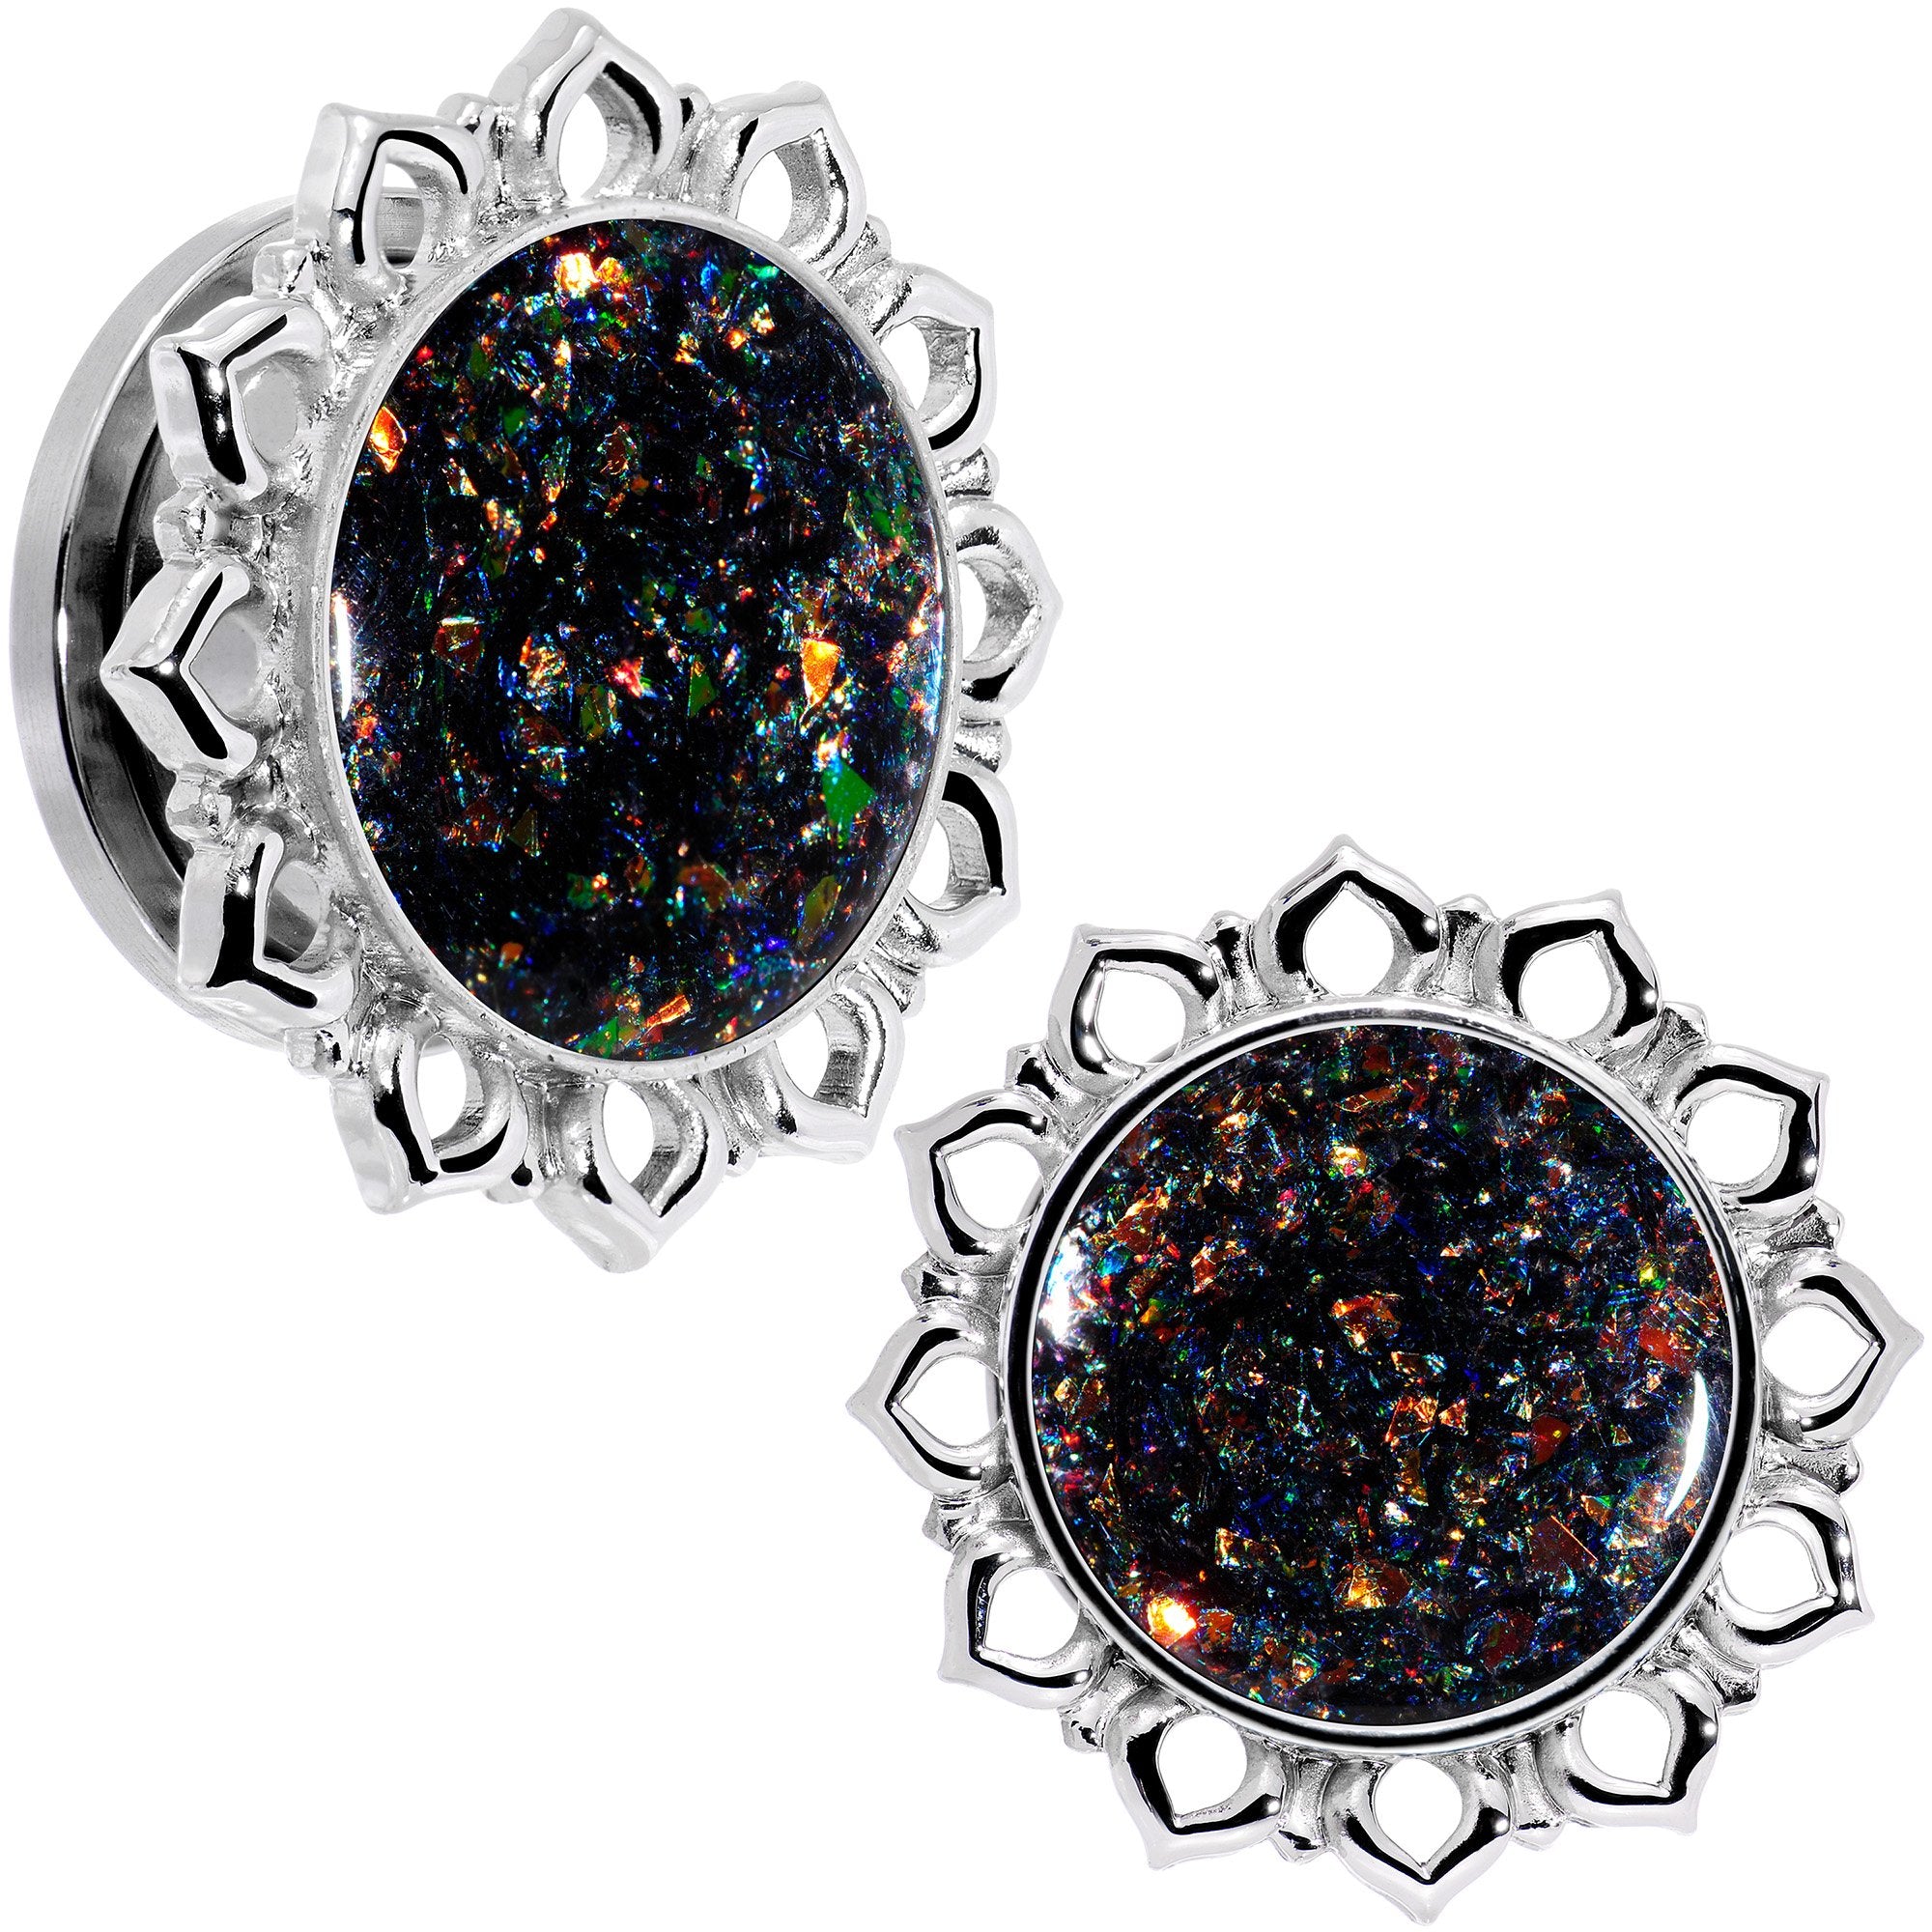 Handcrafted Black Faux Opal Mandala Screw Fit Plug Set Sizes 8mm to 20mm